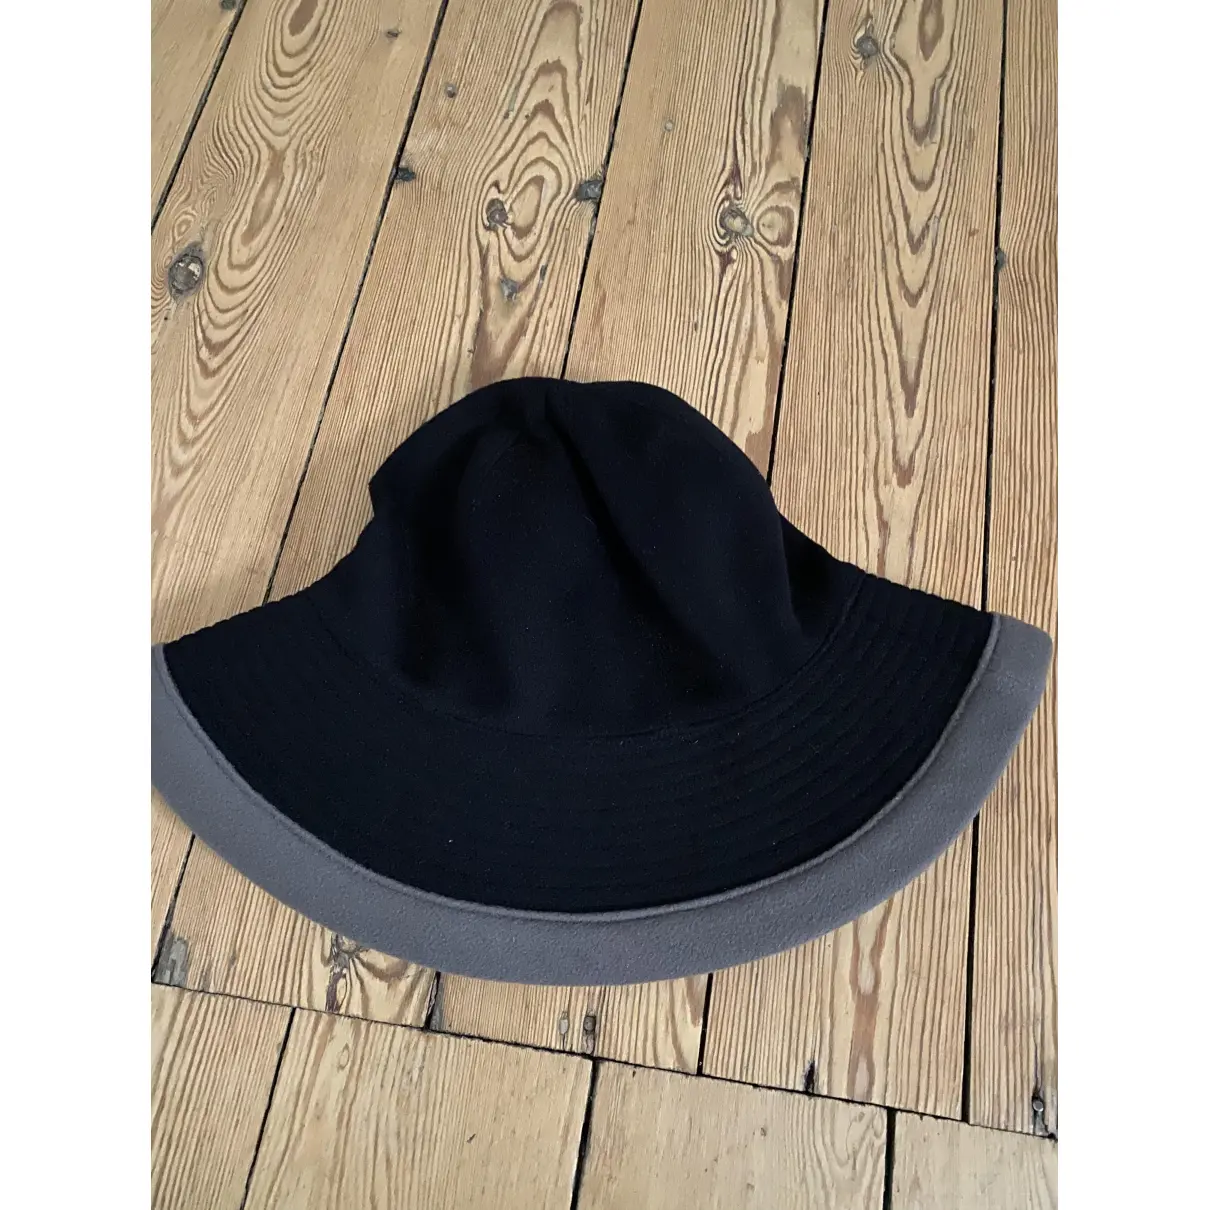 Buy Hermès Cashmere hat online